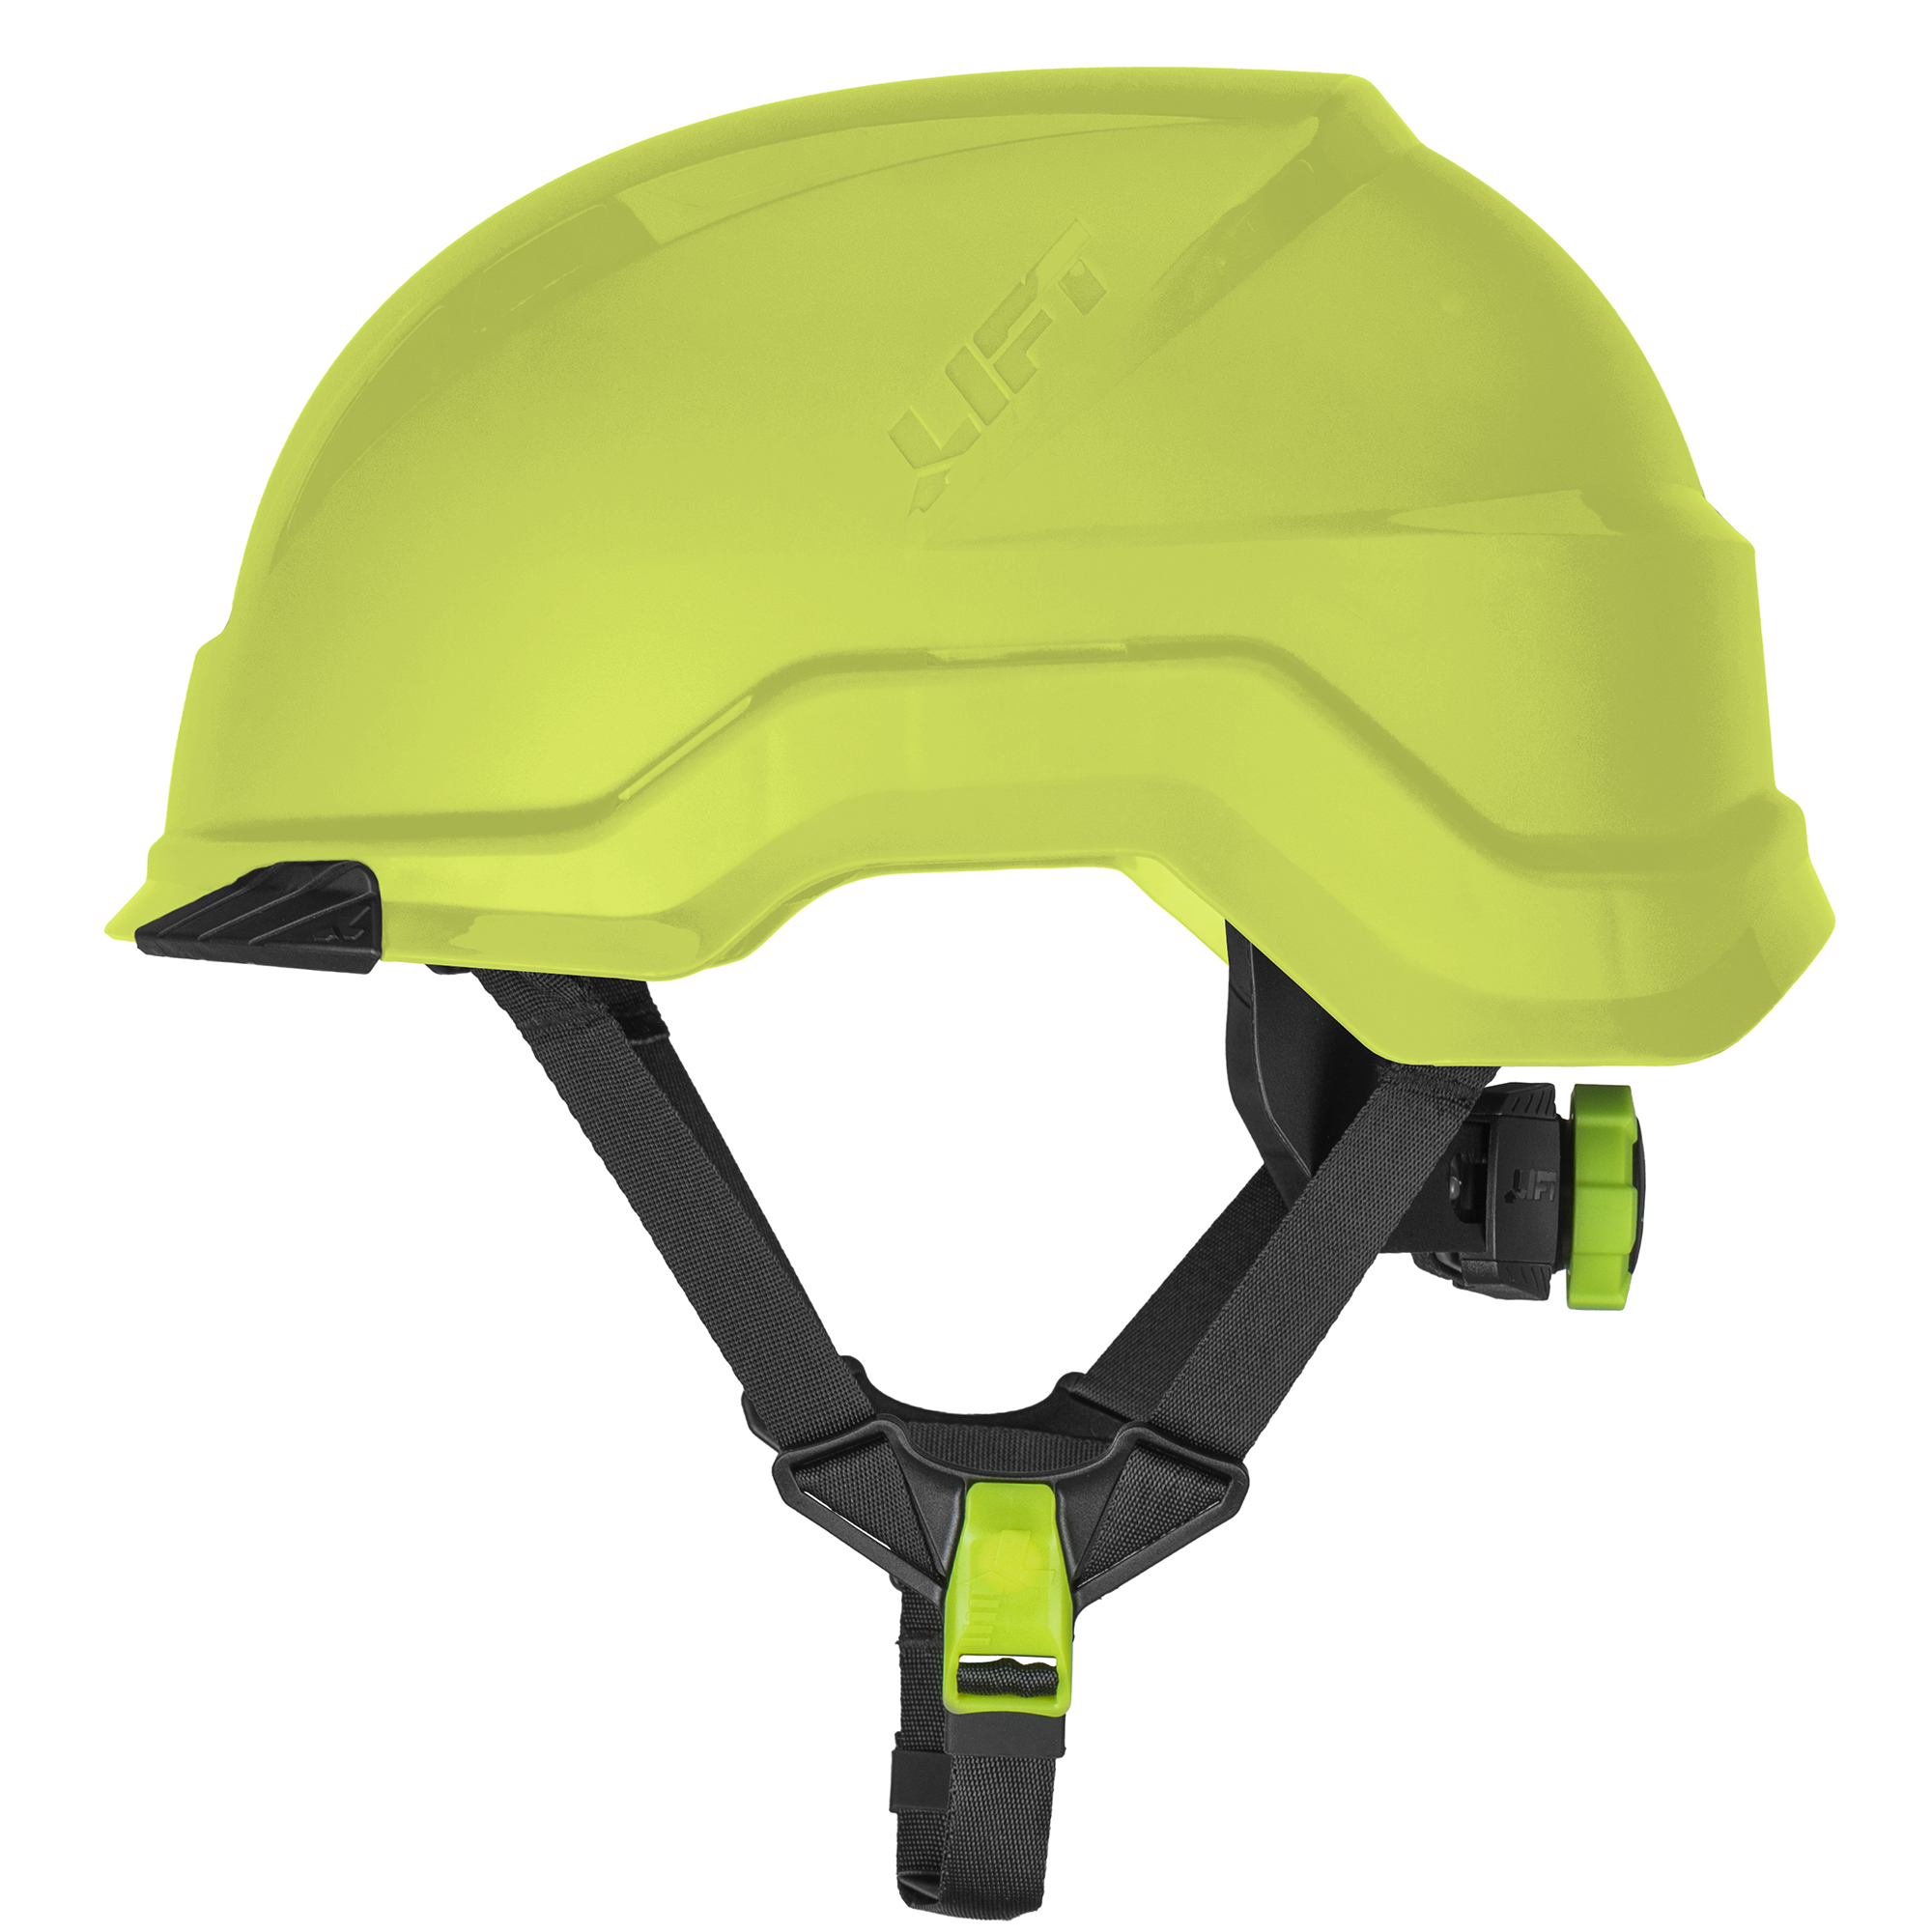 LIFT Safety, RADIX TYPE 2 VENTED (Hi-Viz Yellow), Hard Hat Style Helmet, Hat Size Adjustable, Color Yellow, Model HRX-22HVC2